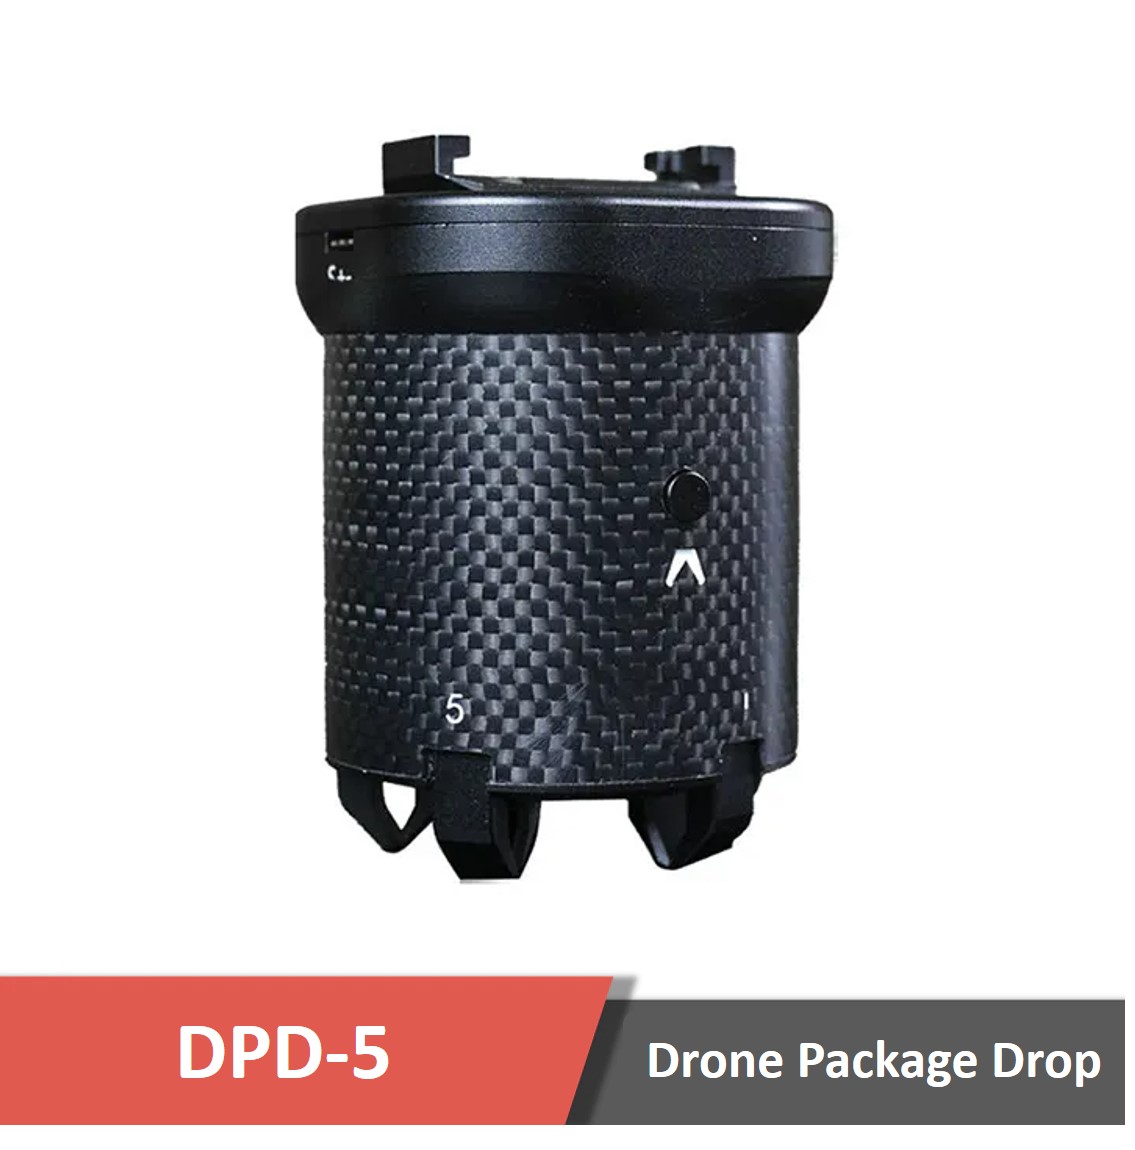 Dpd 5 1 - searchlight,uav brightness,drone searchlight,payload,dual access,brightness control,night fligth - motionew - 1